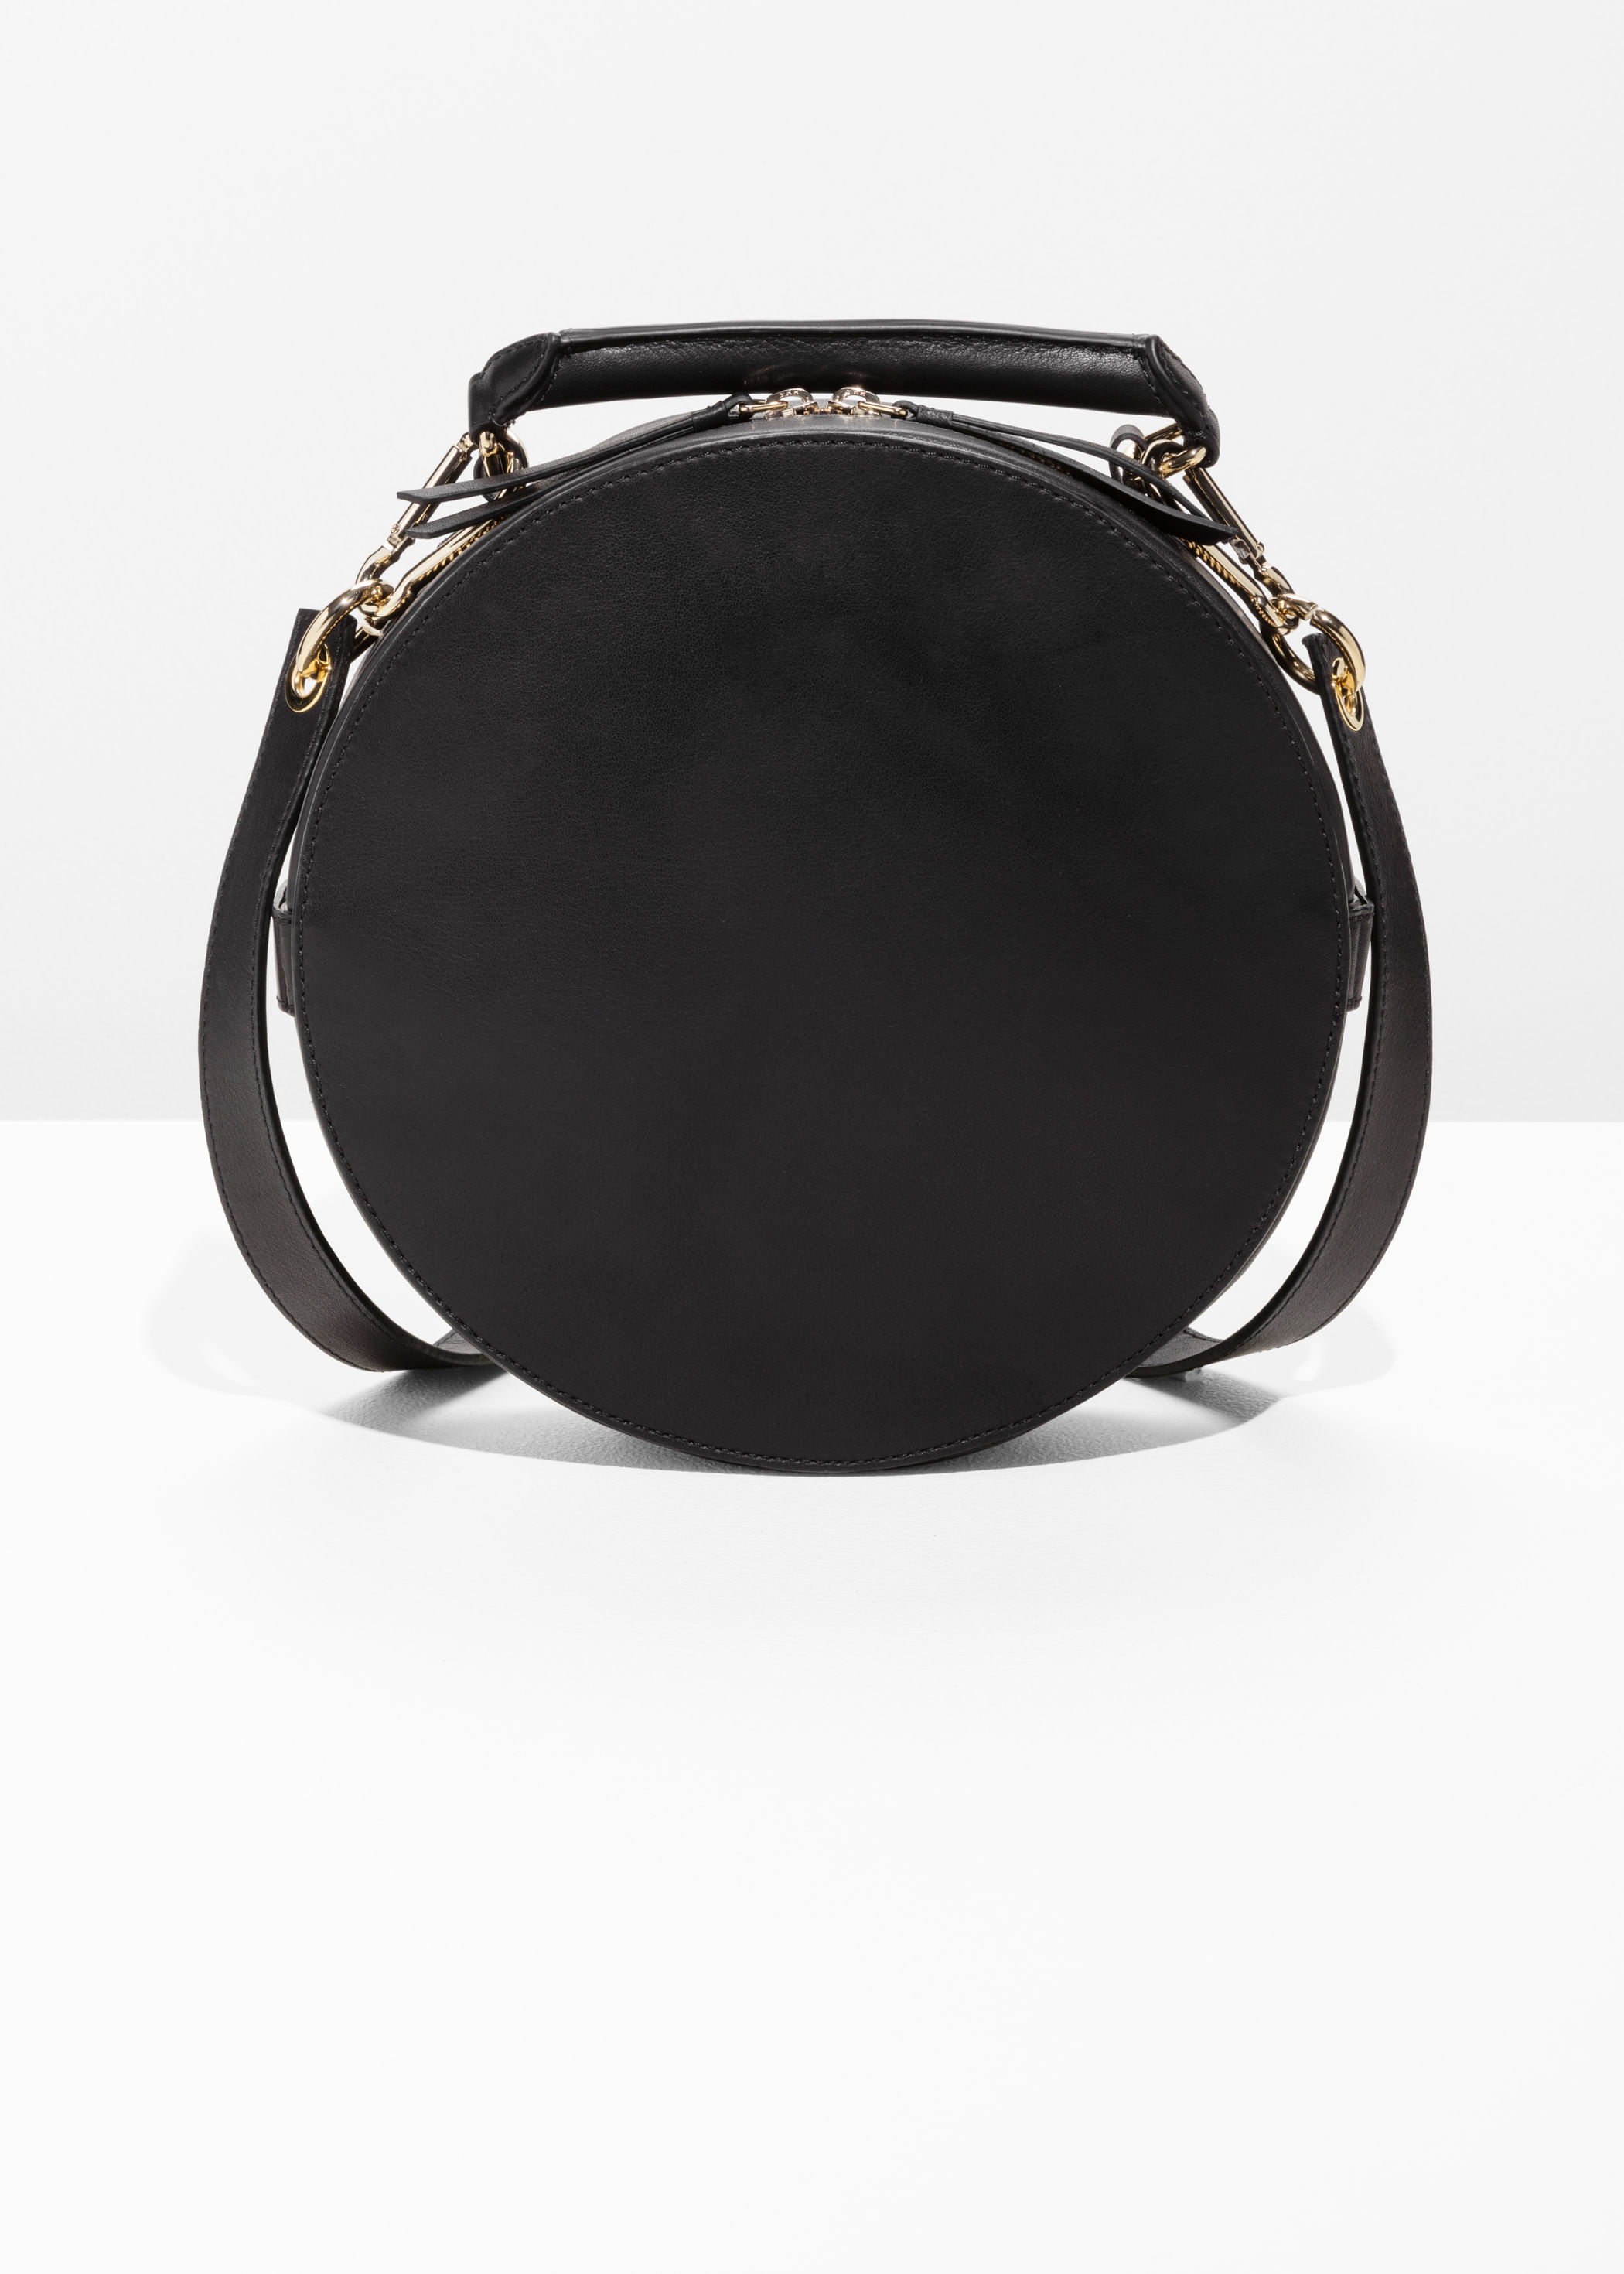 Circle Bag $145